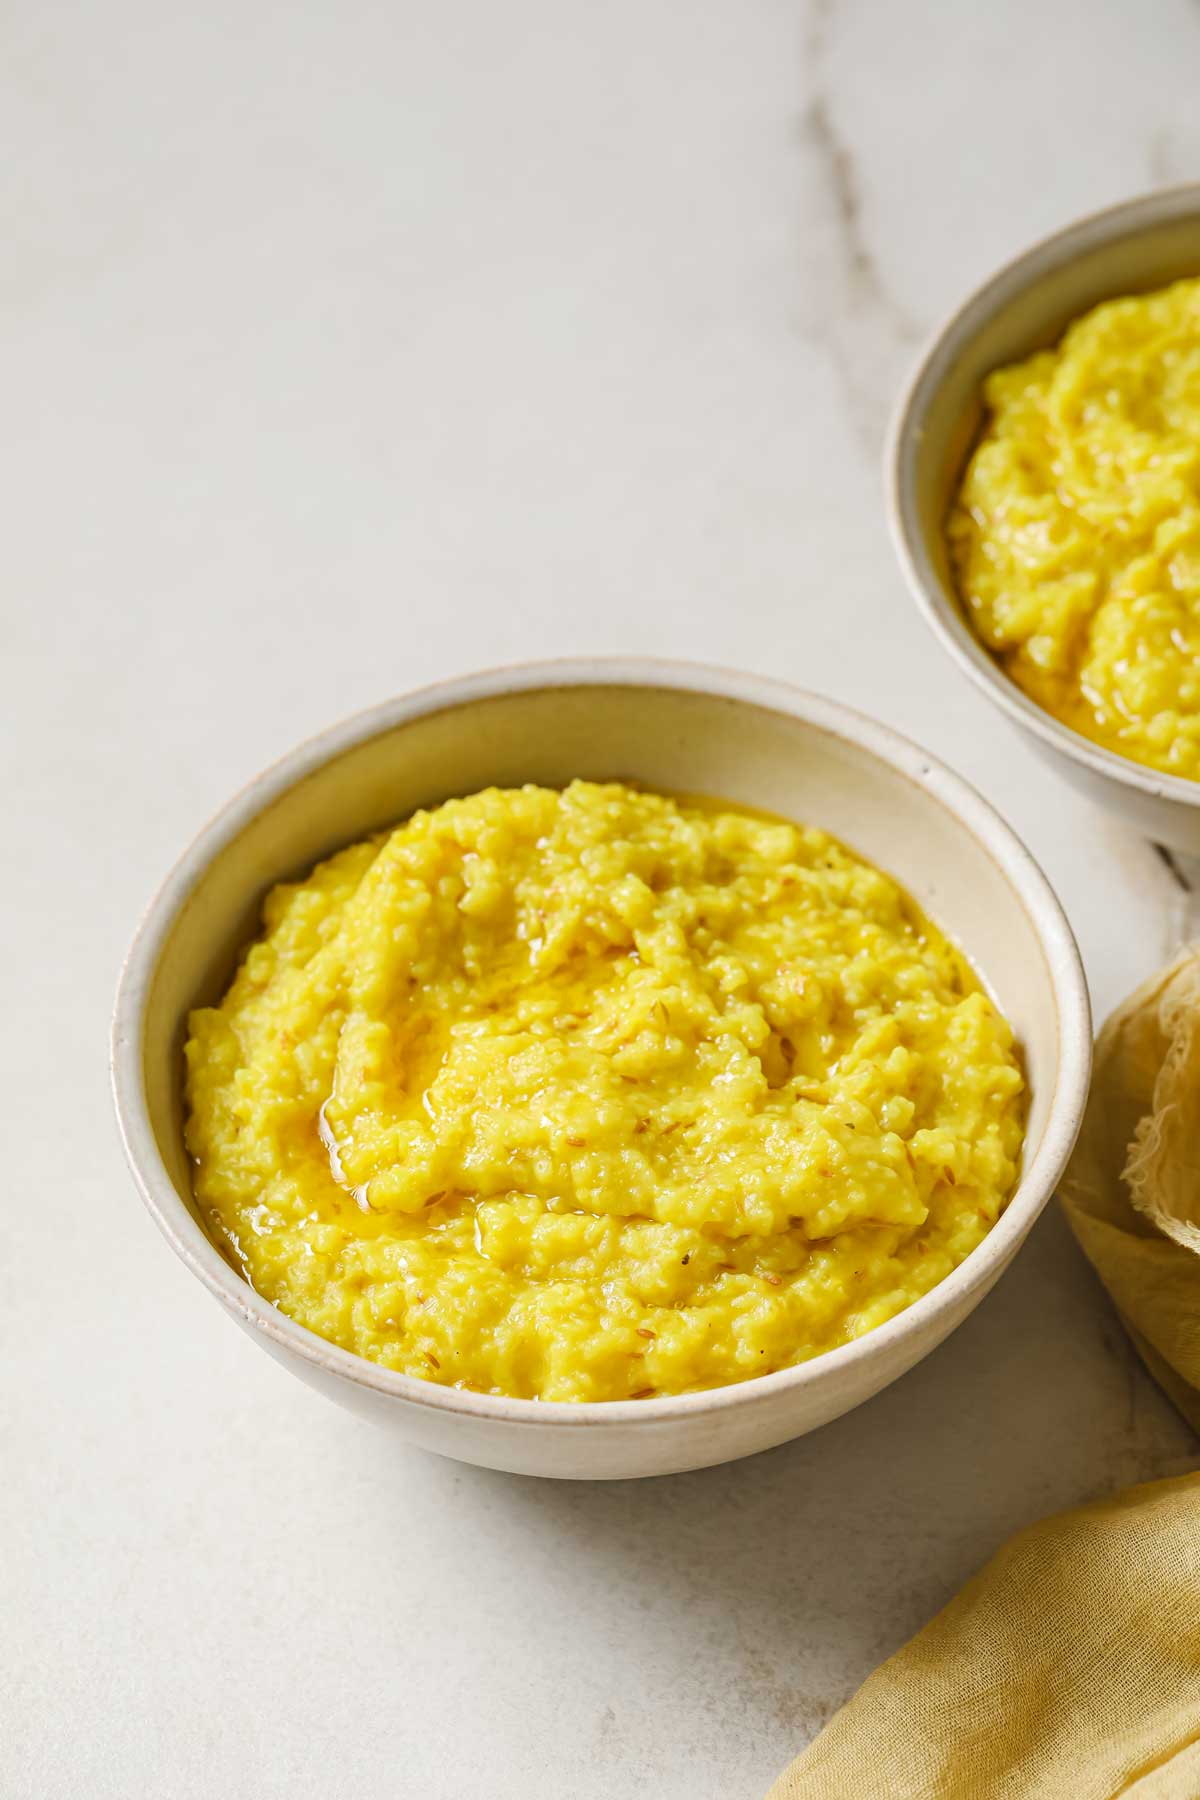 khichdi (rice and yellow lentil porridge)